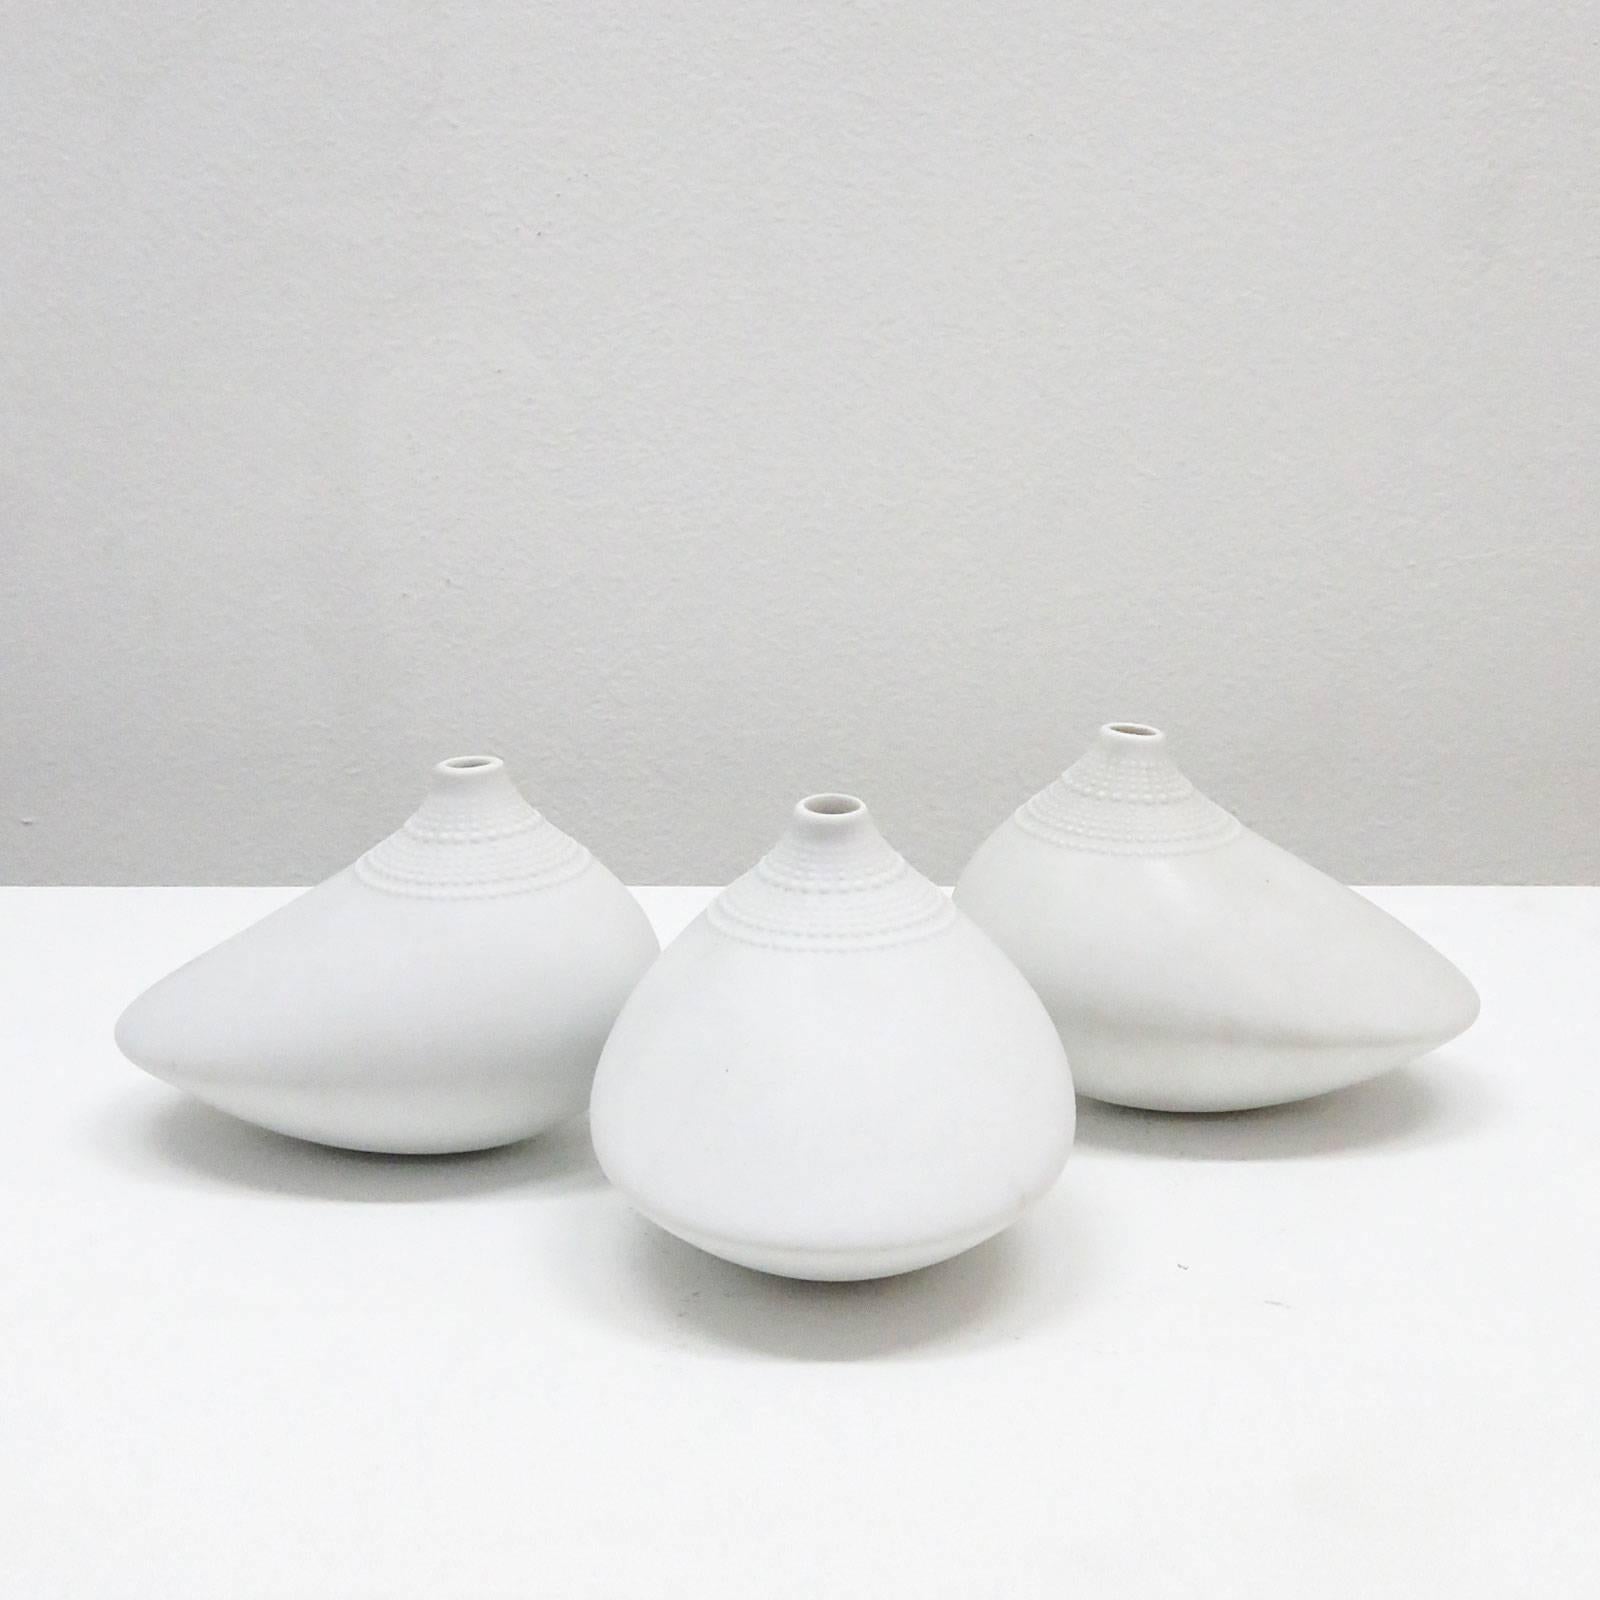 German Tapio Wirkkala 'Pollo' Vases for Rosenthal Studio Line, 1970